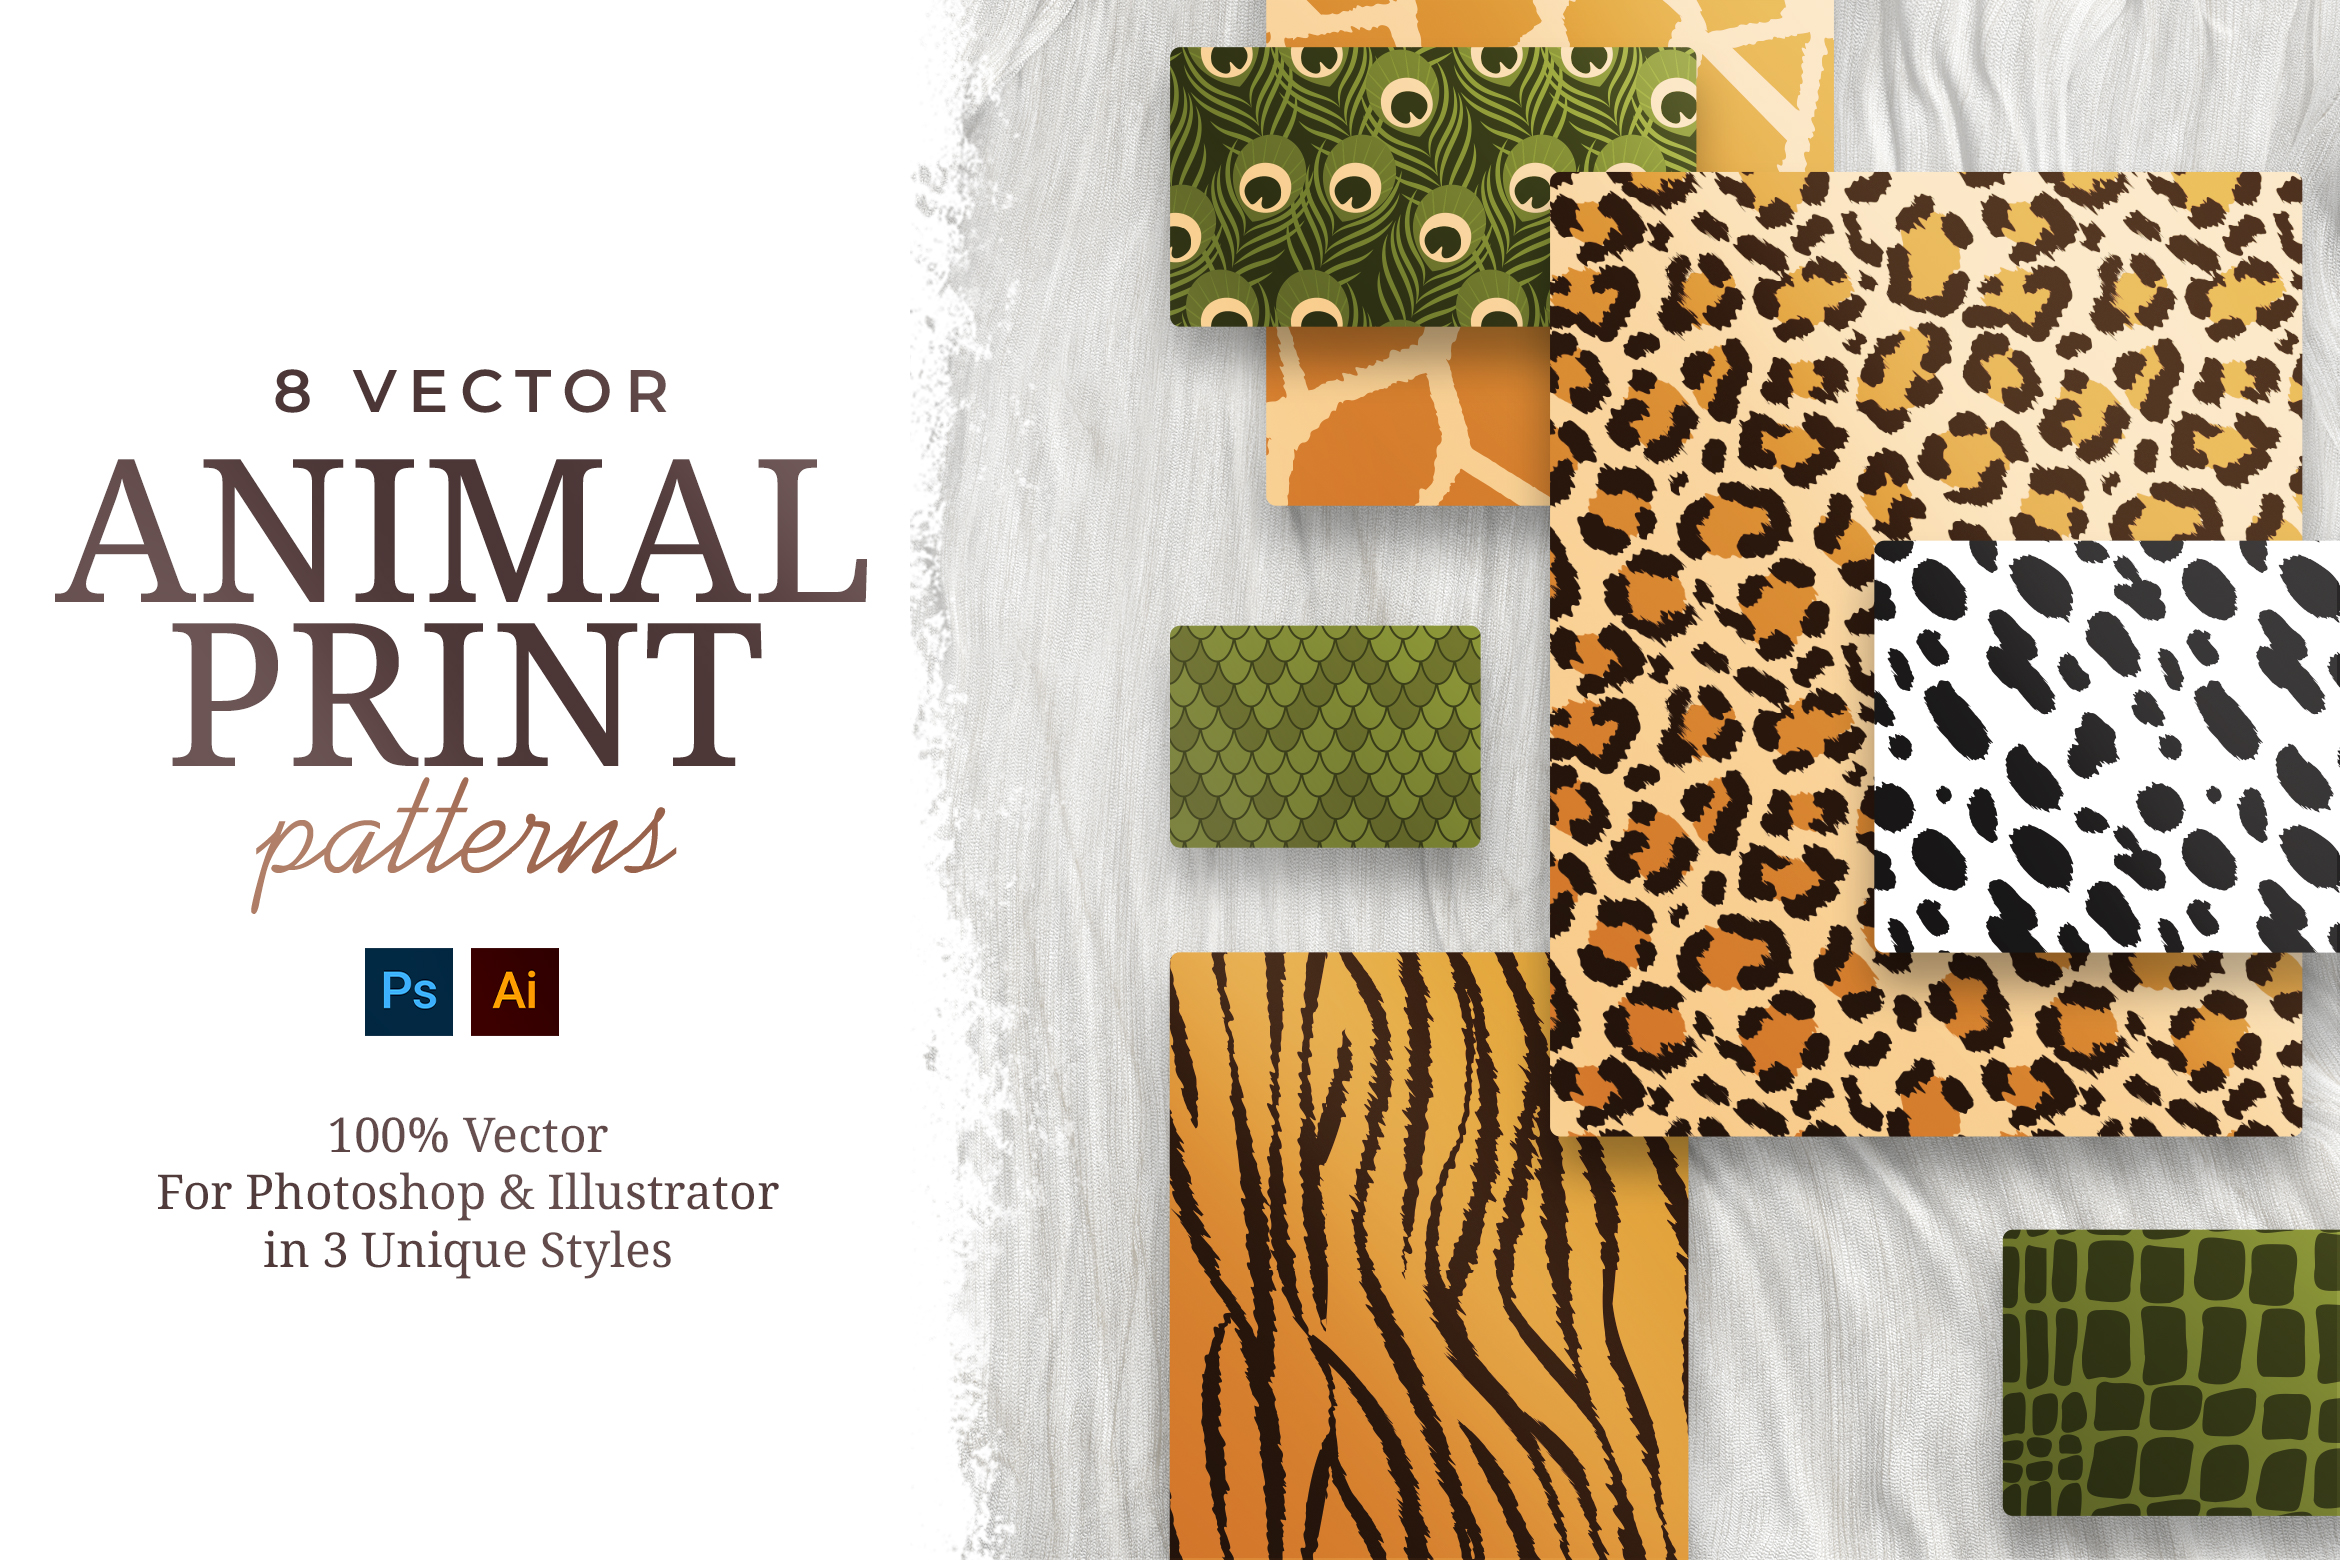 Vector Animal Print Patterns